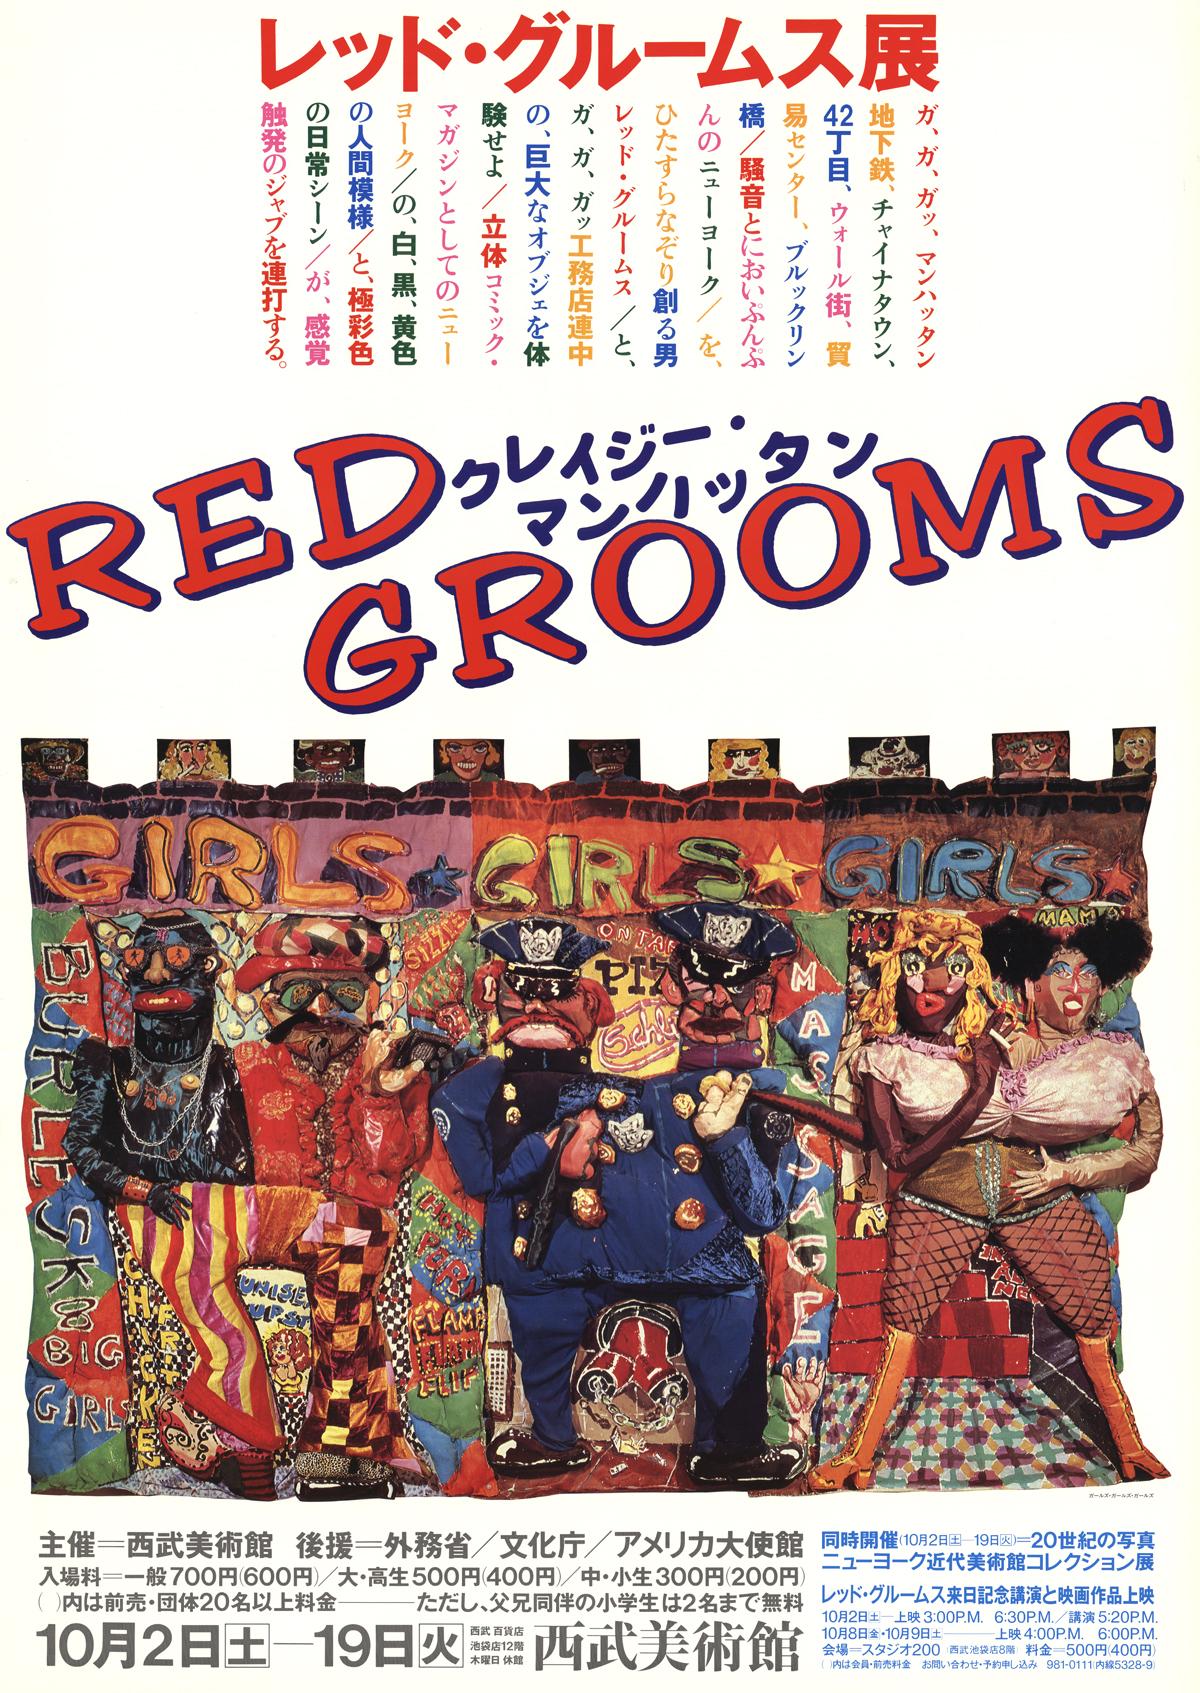 Red Grooms-Girls Girls Girls-